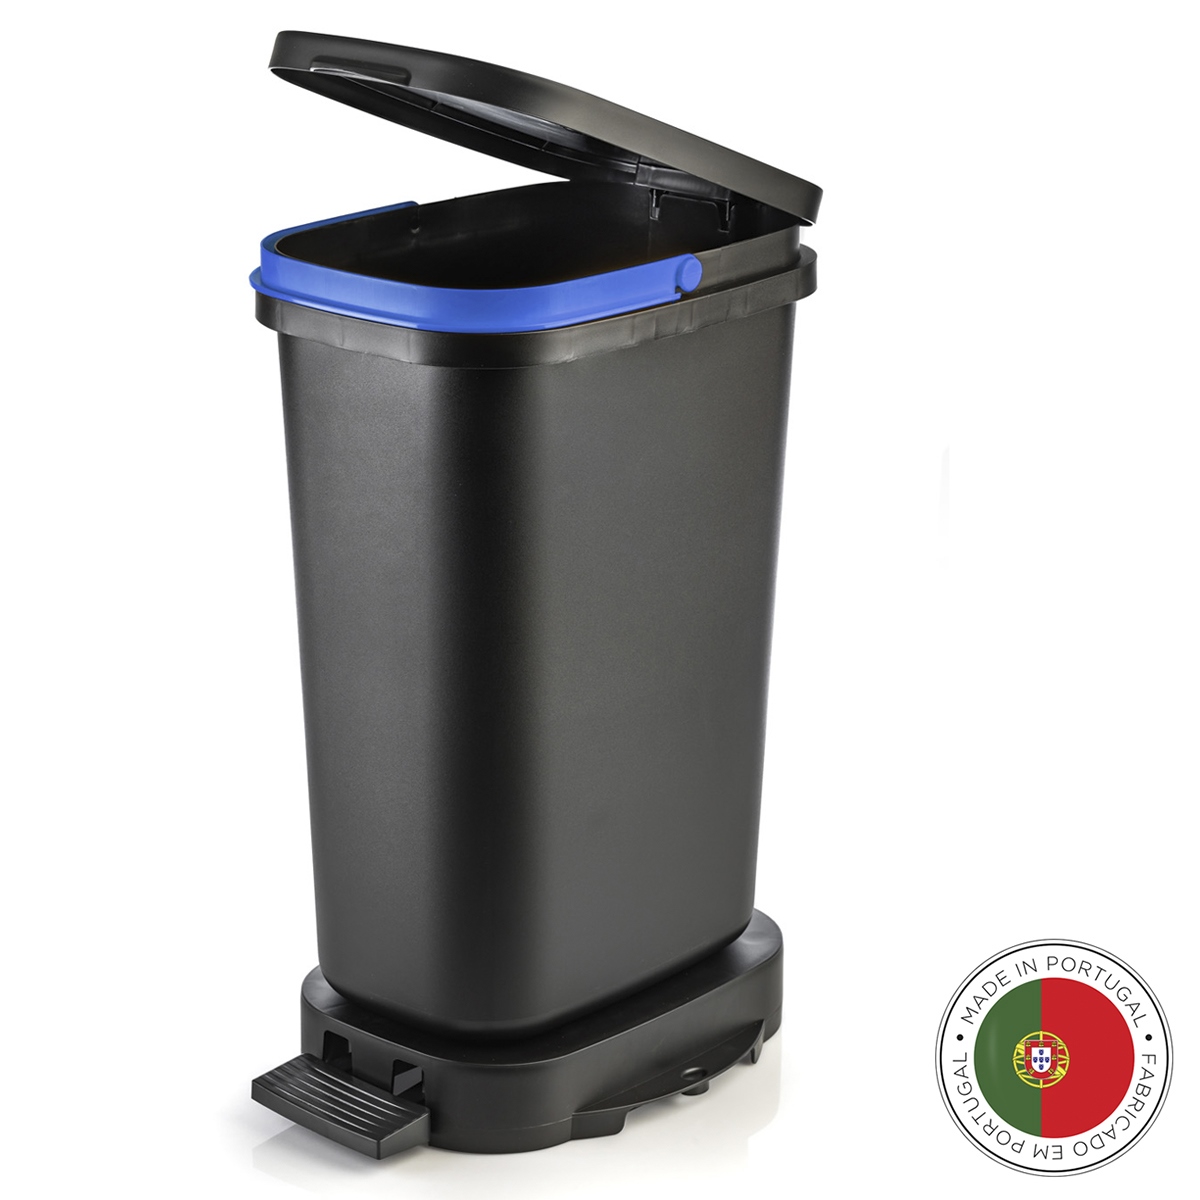 Мусорный бак с педалью BE-ECO black blue, 26х36 см, 50 см, 20 л, Пластик, Faplana, Португалия